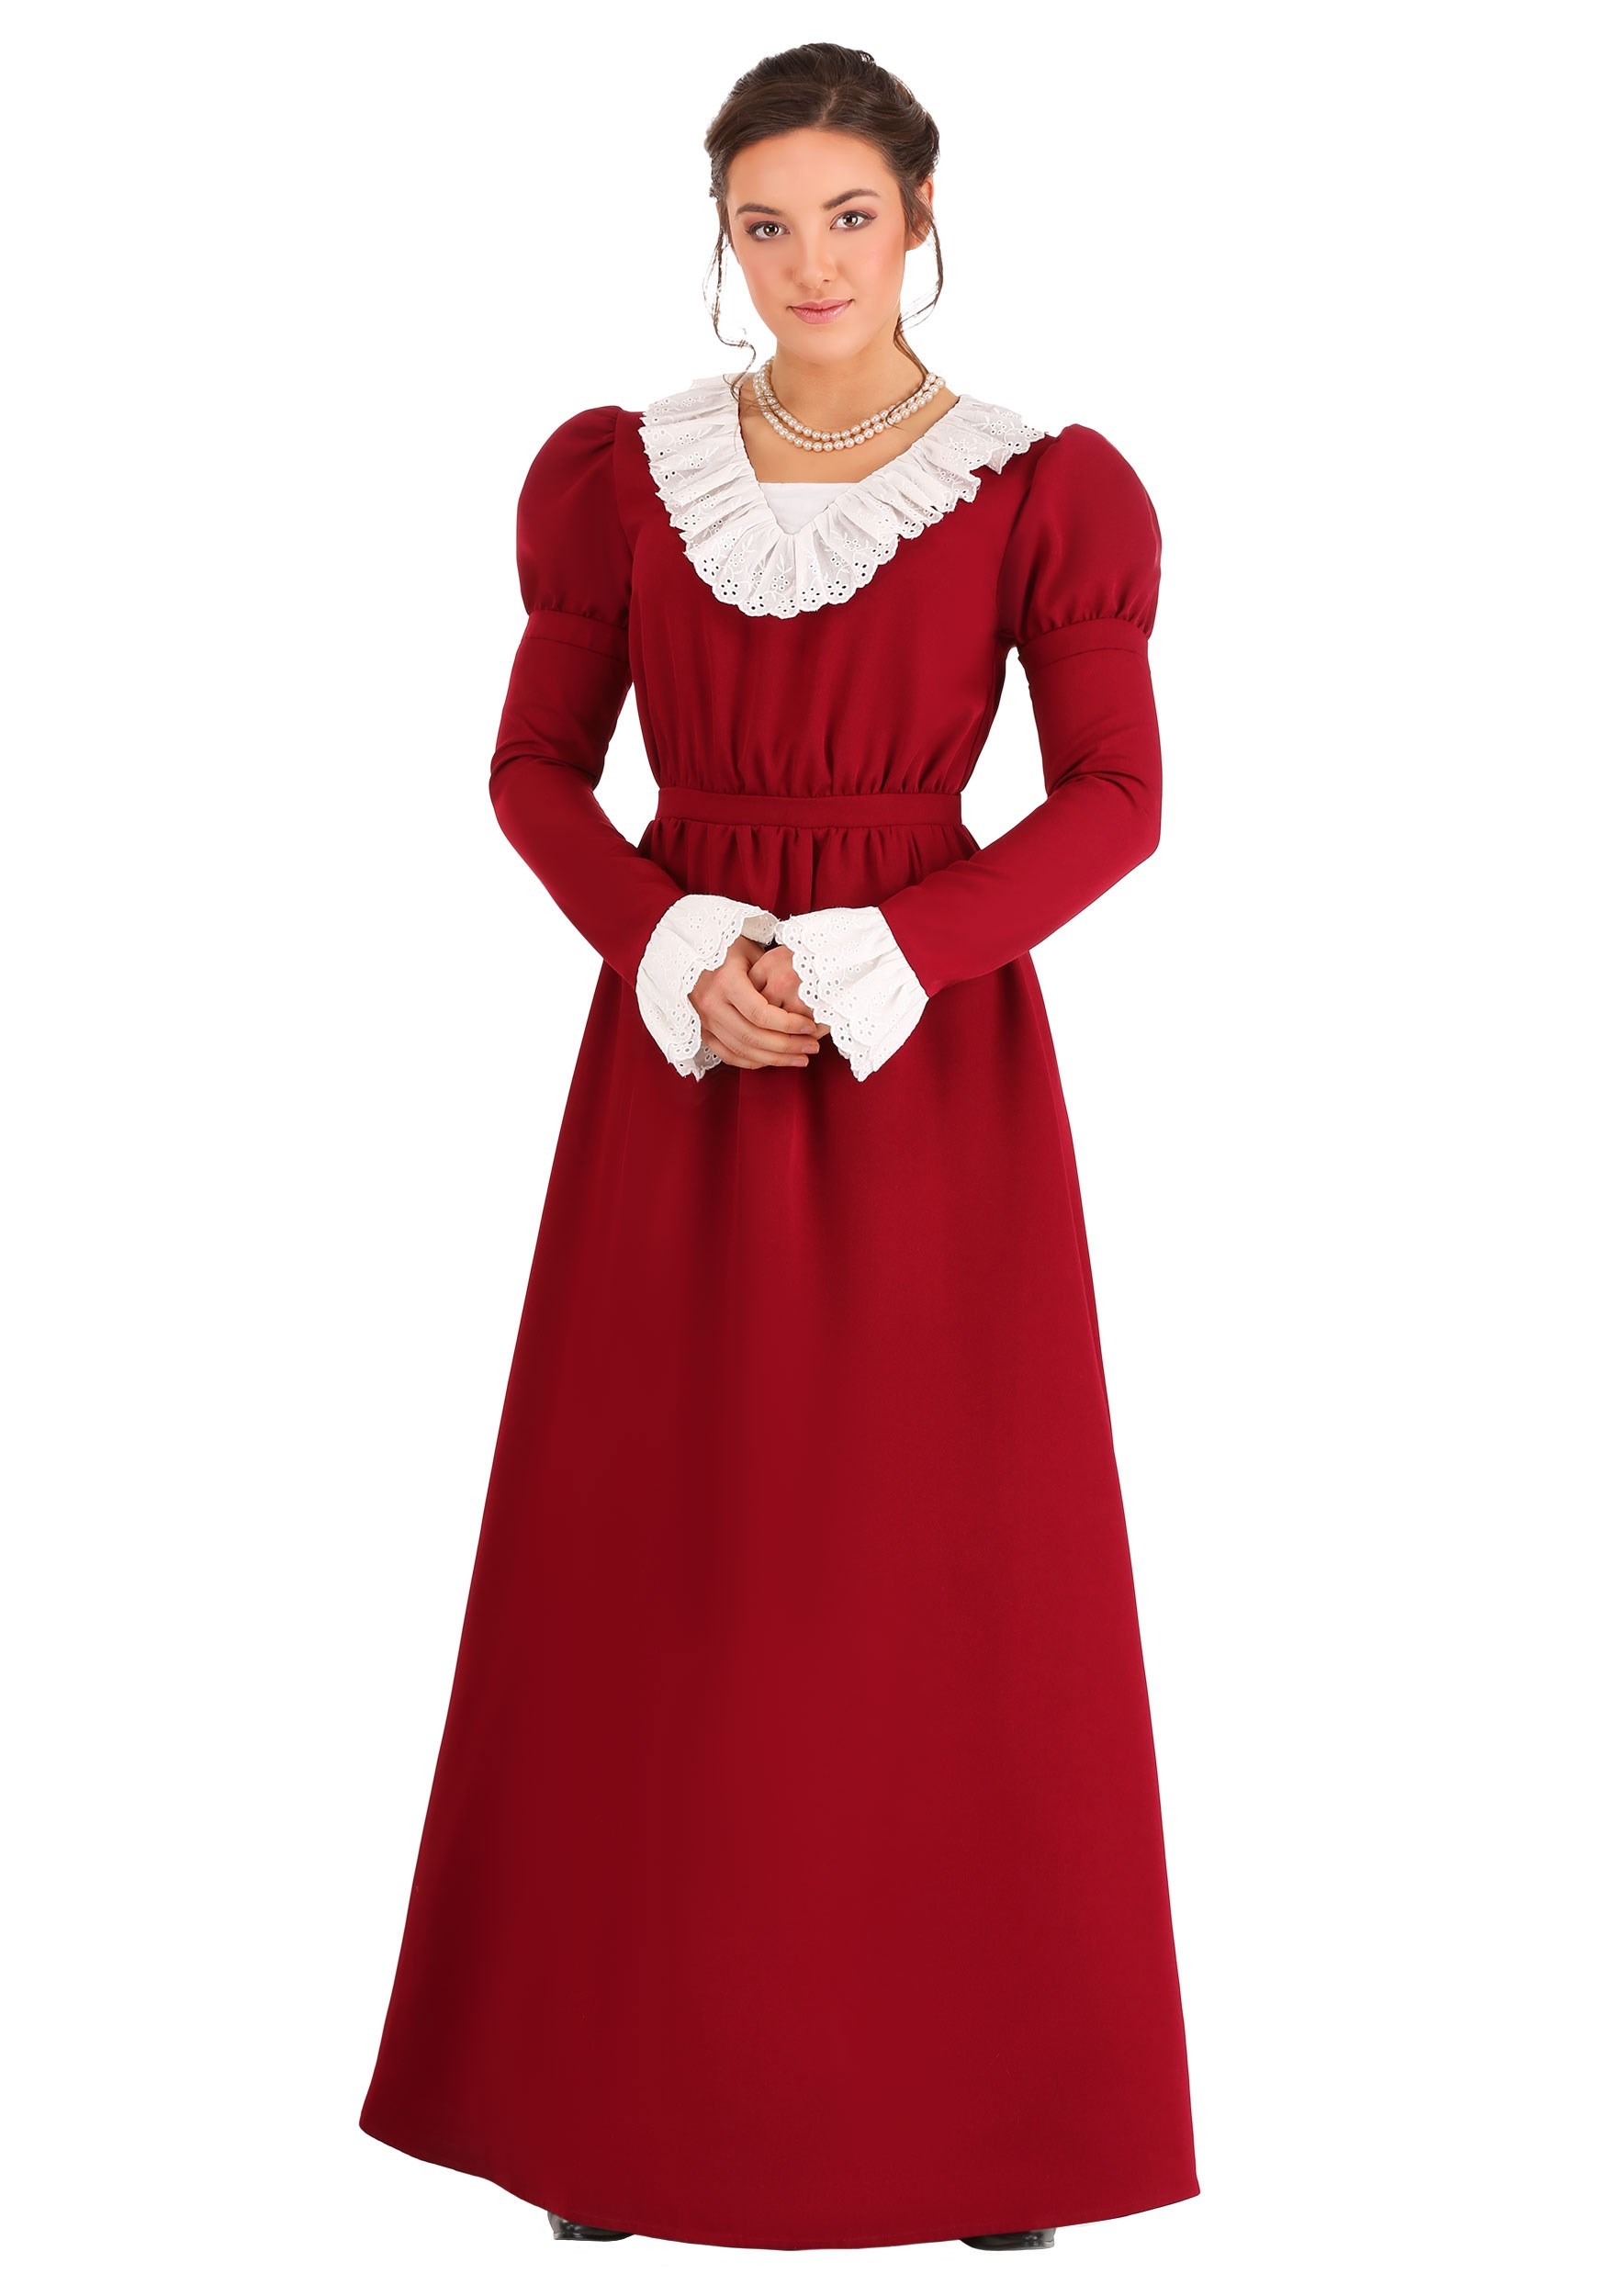 Women's Abigail Adams Red Costume Dress